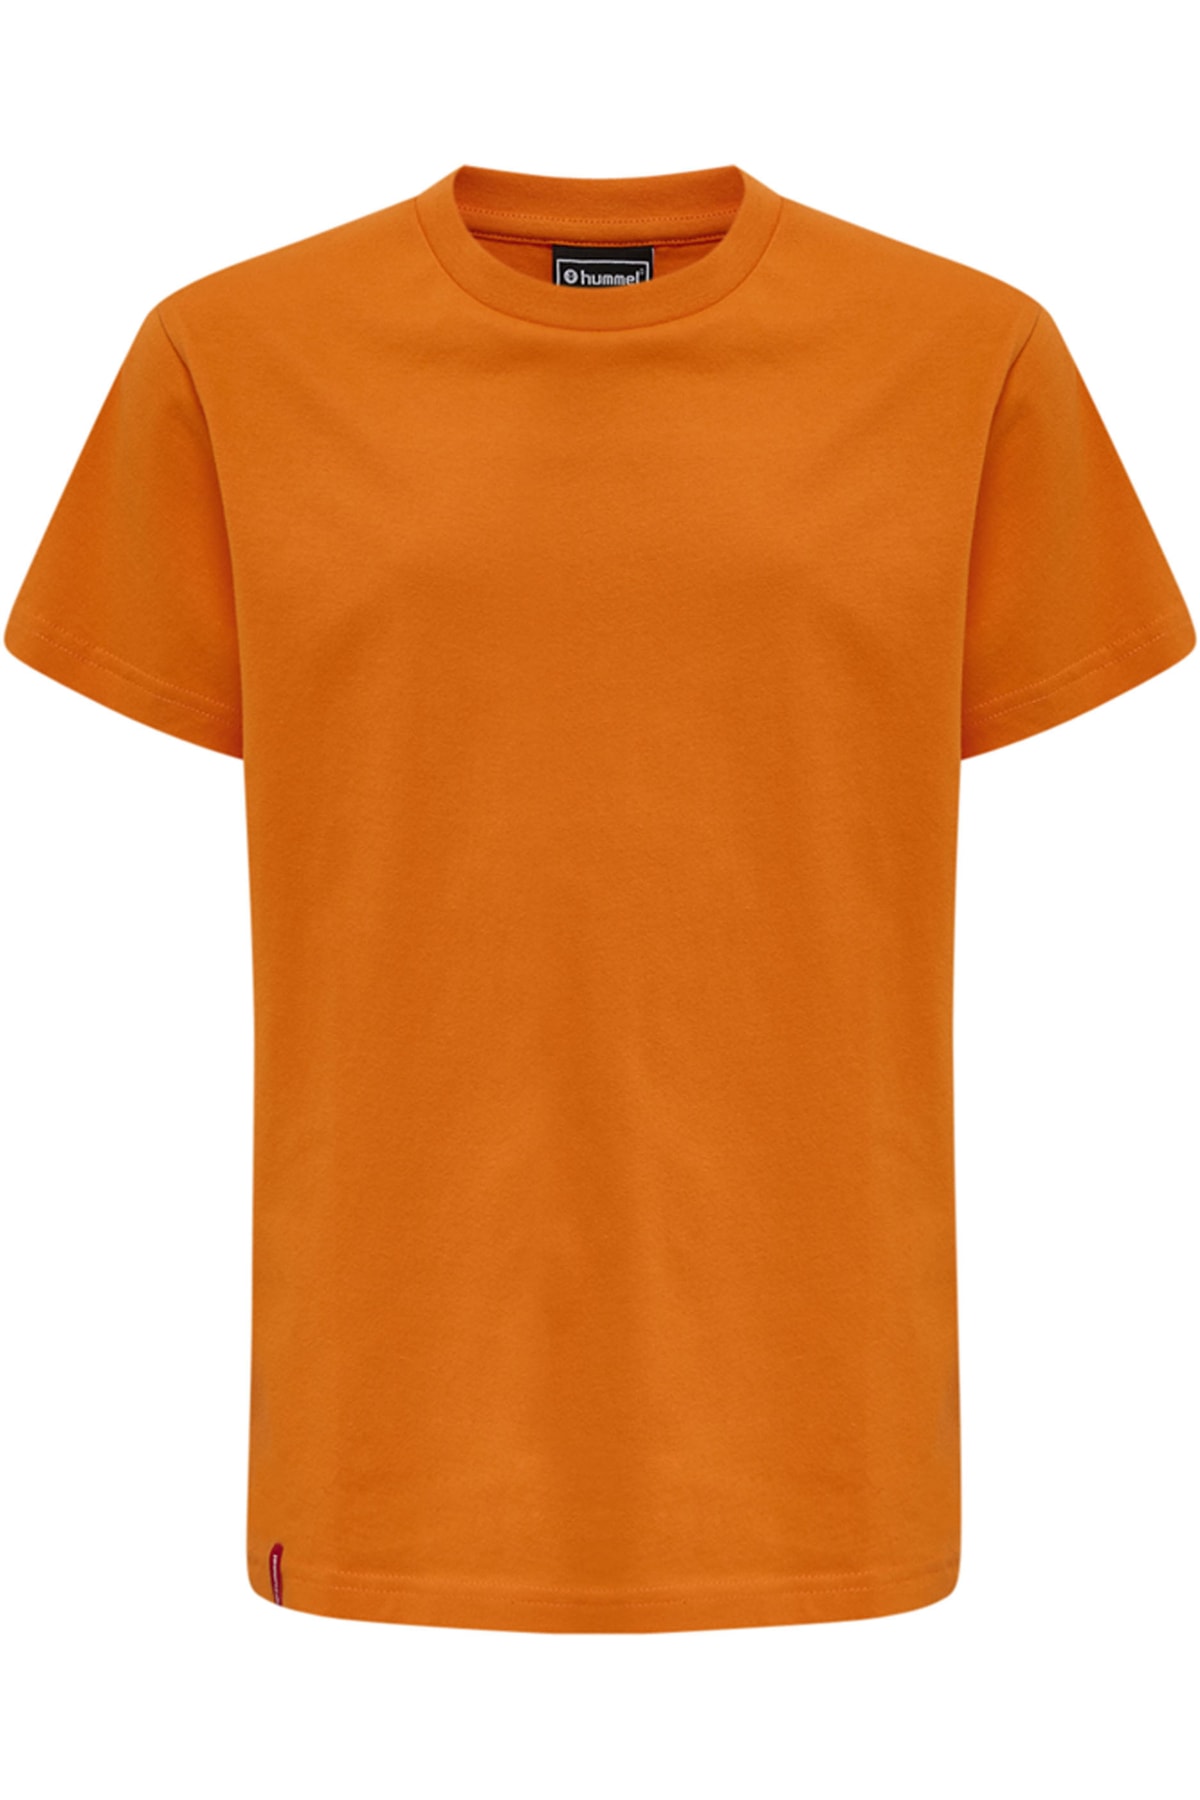 HUMMEL T-Shirt Orange Regular Fit